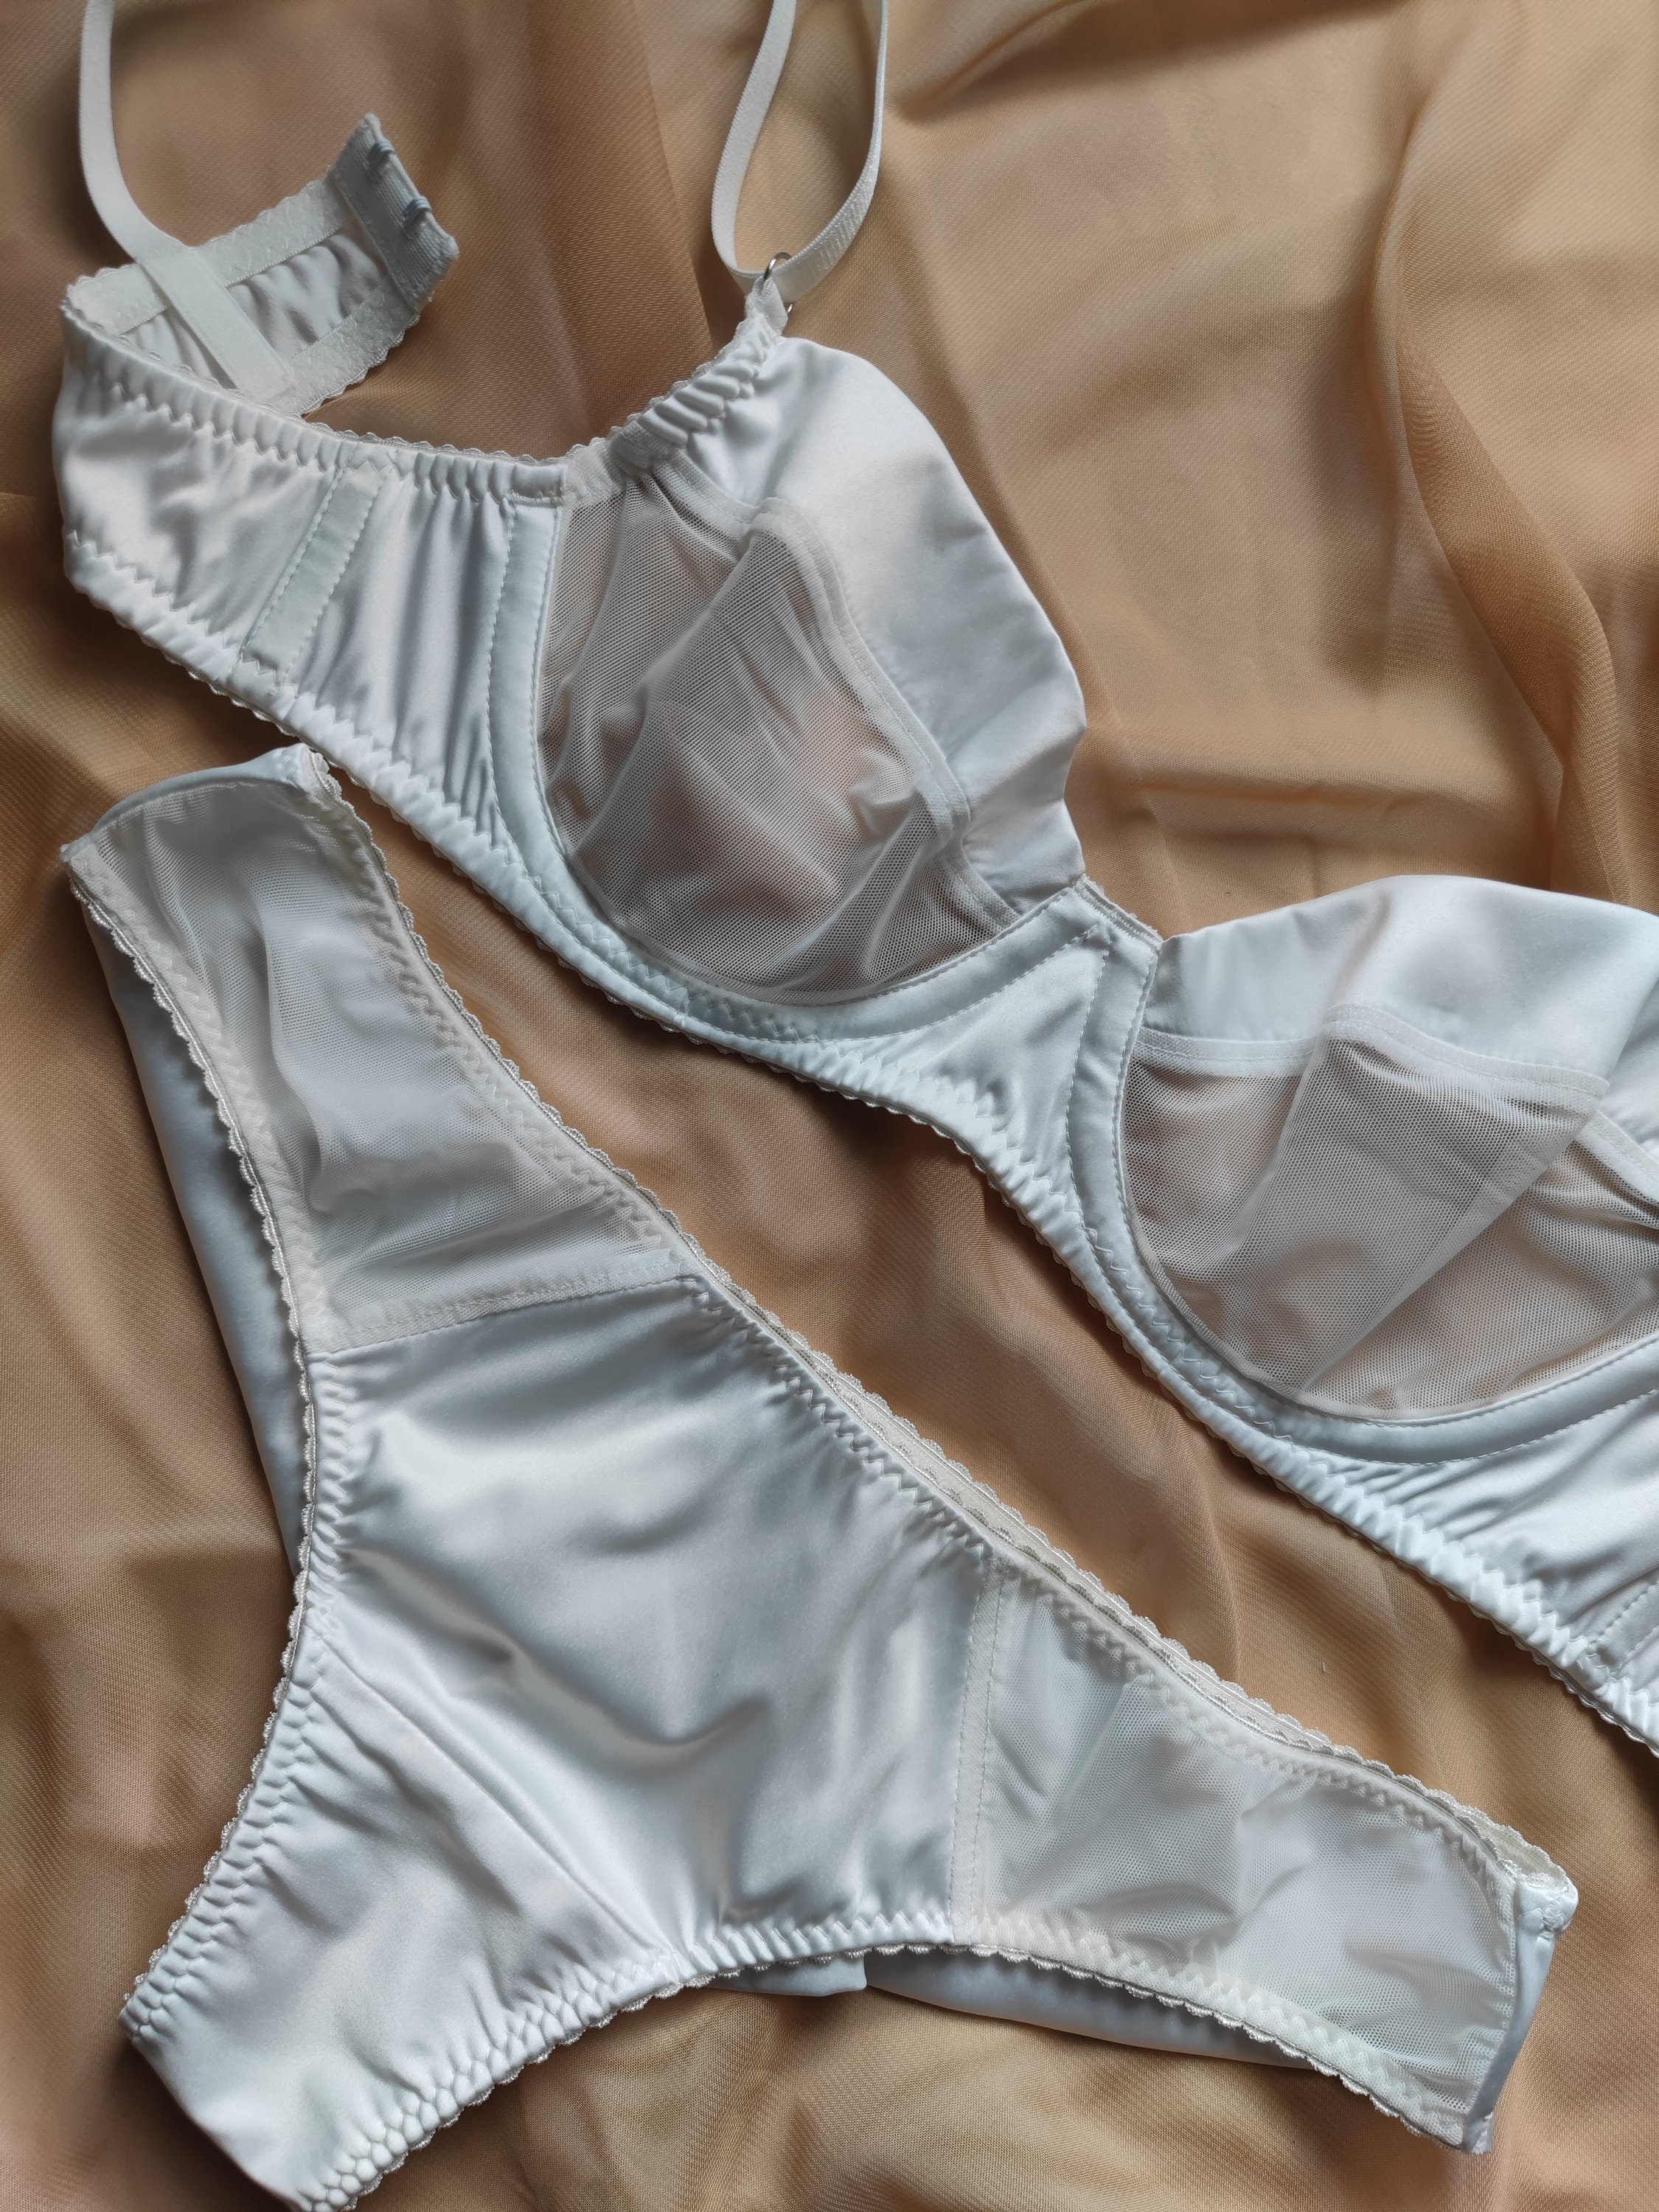 Honeymoon lingerie wedding nite bra and and 50 similar items